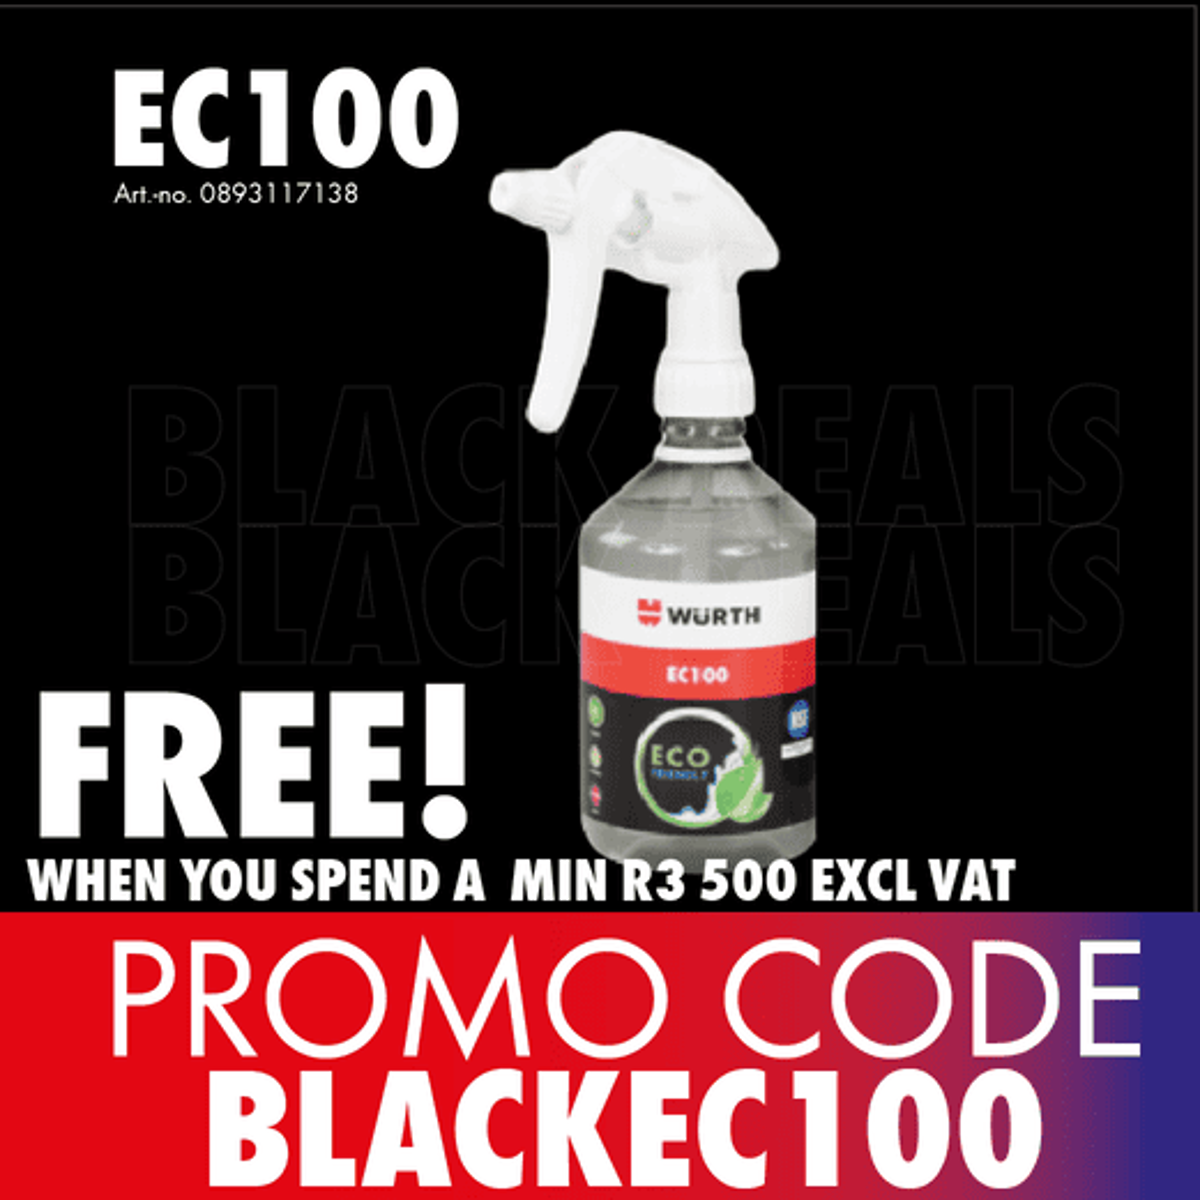  BLACKEC100 